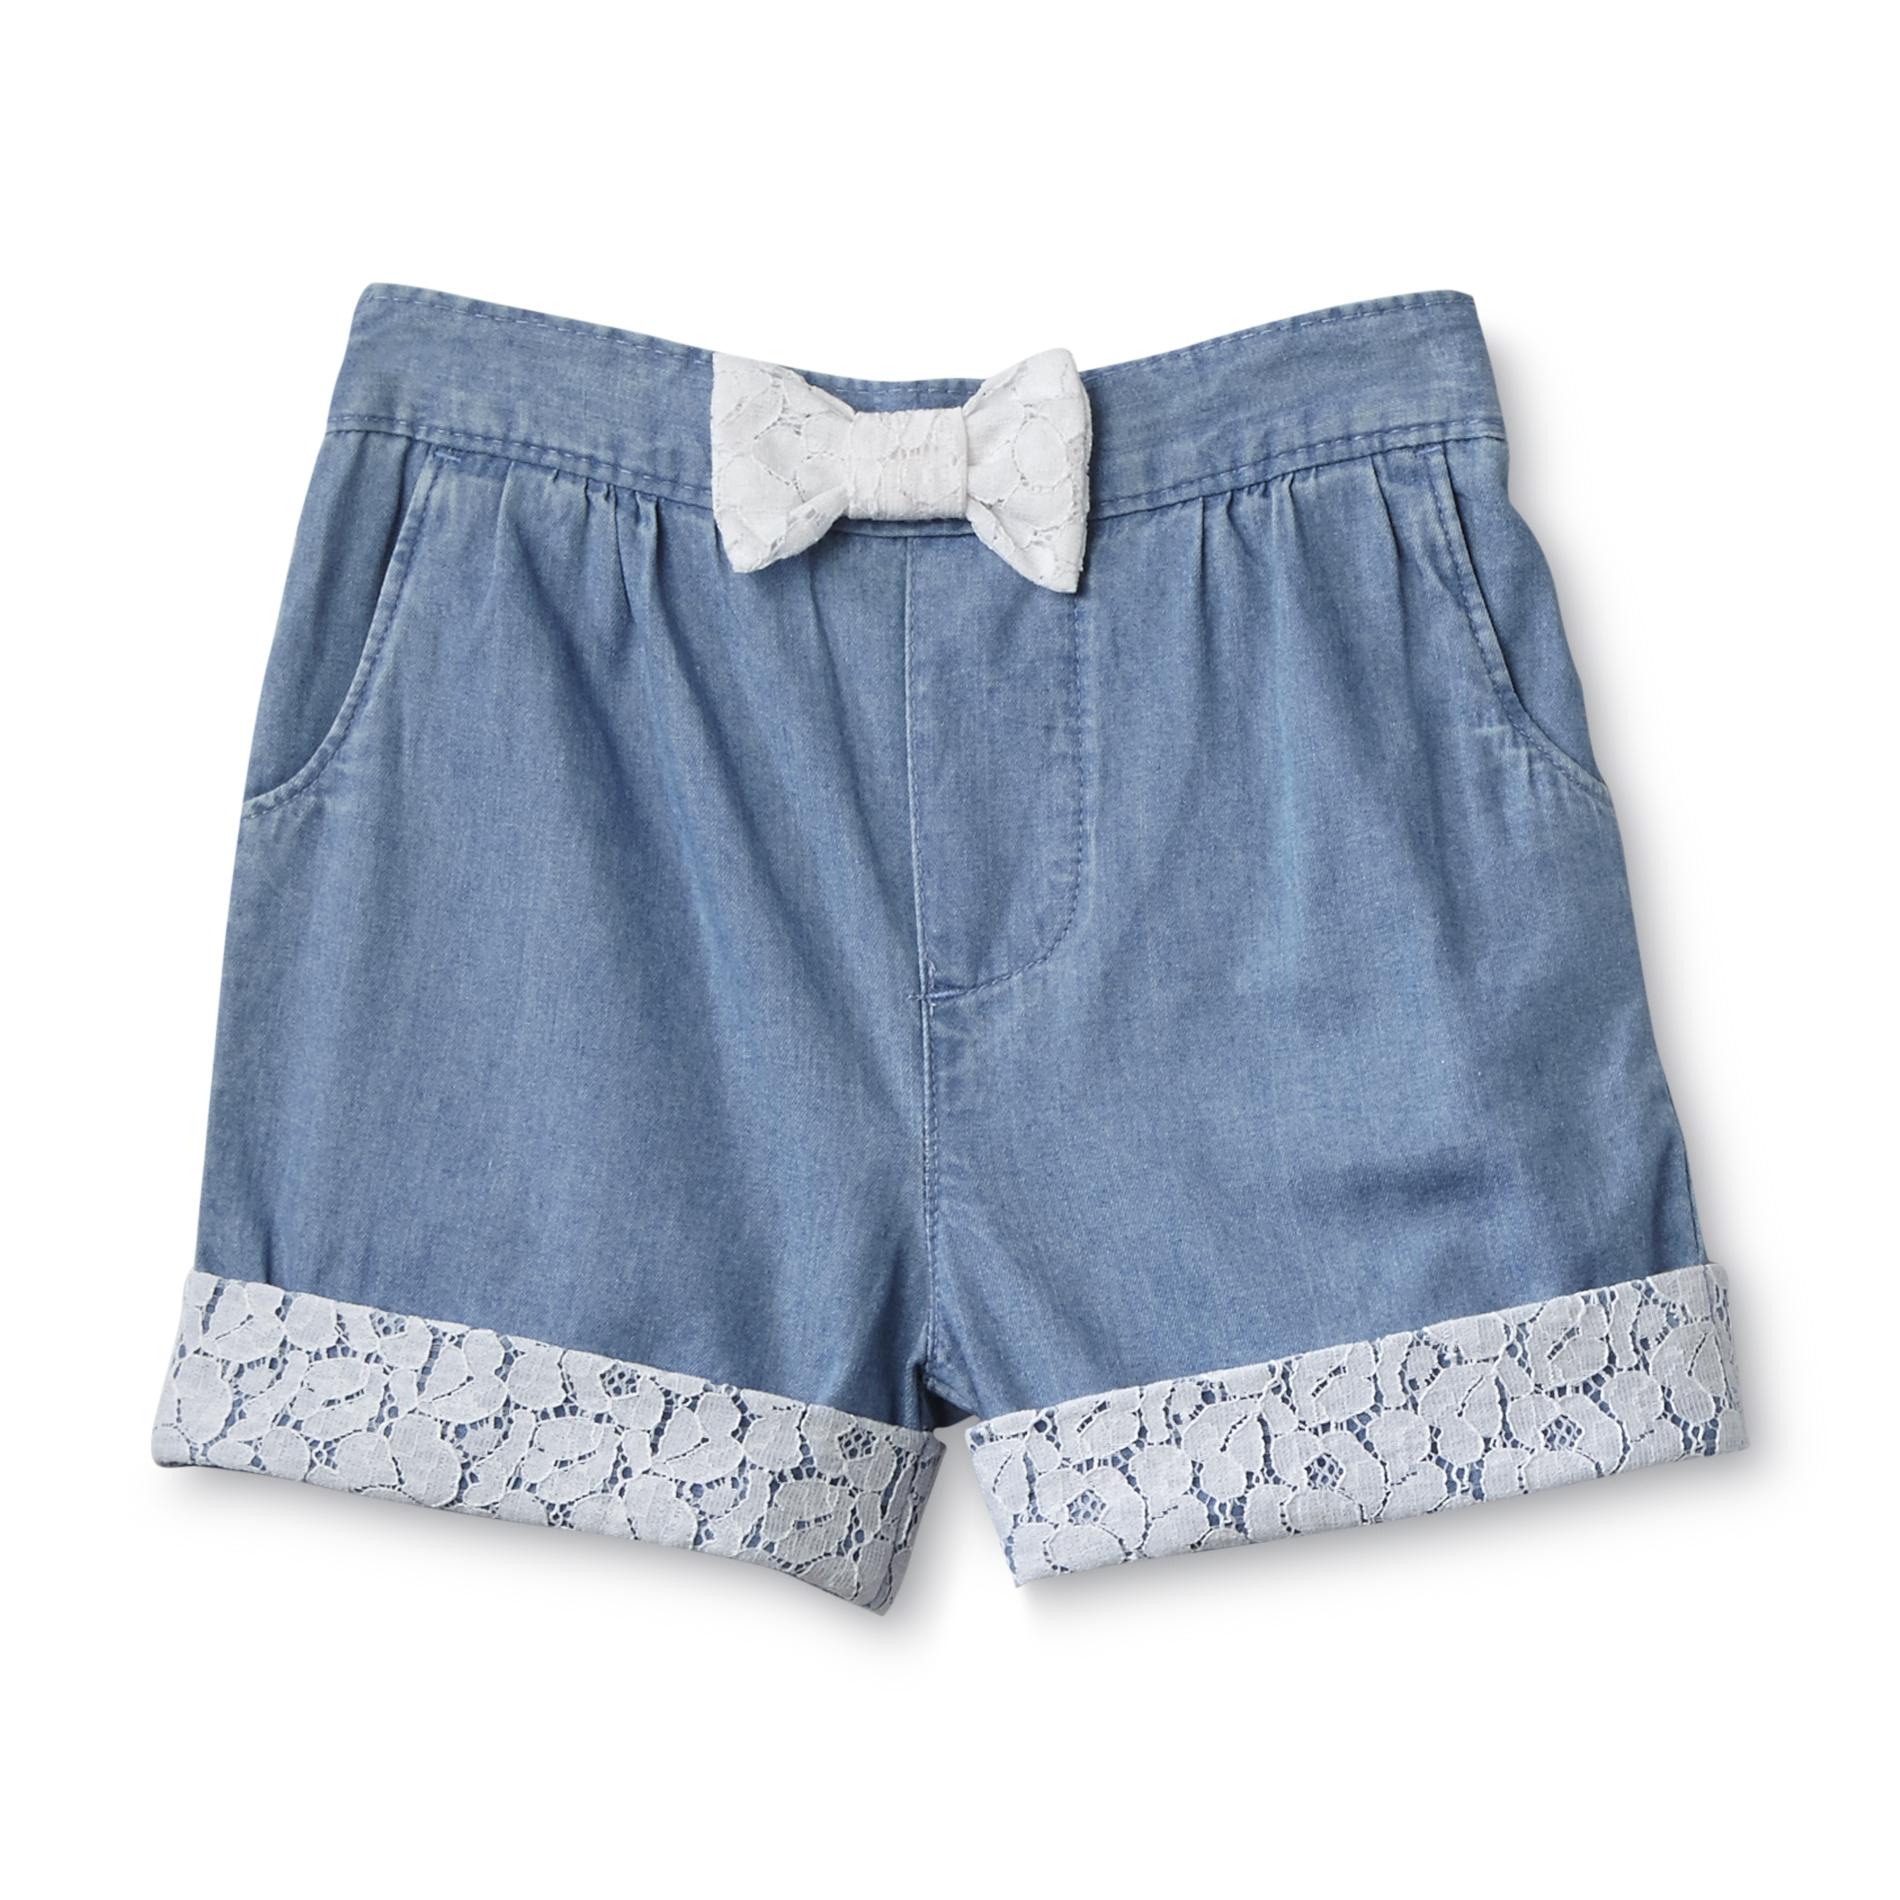 Toughskins Infant & Toddler Girl's Lace-Trim Shorts